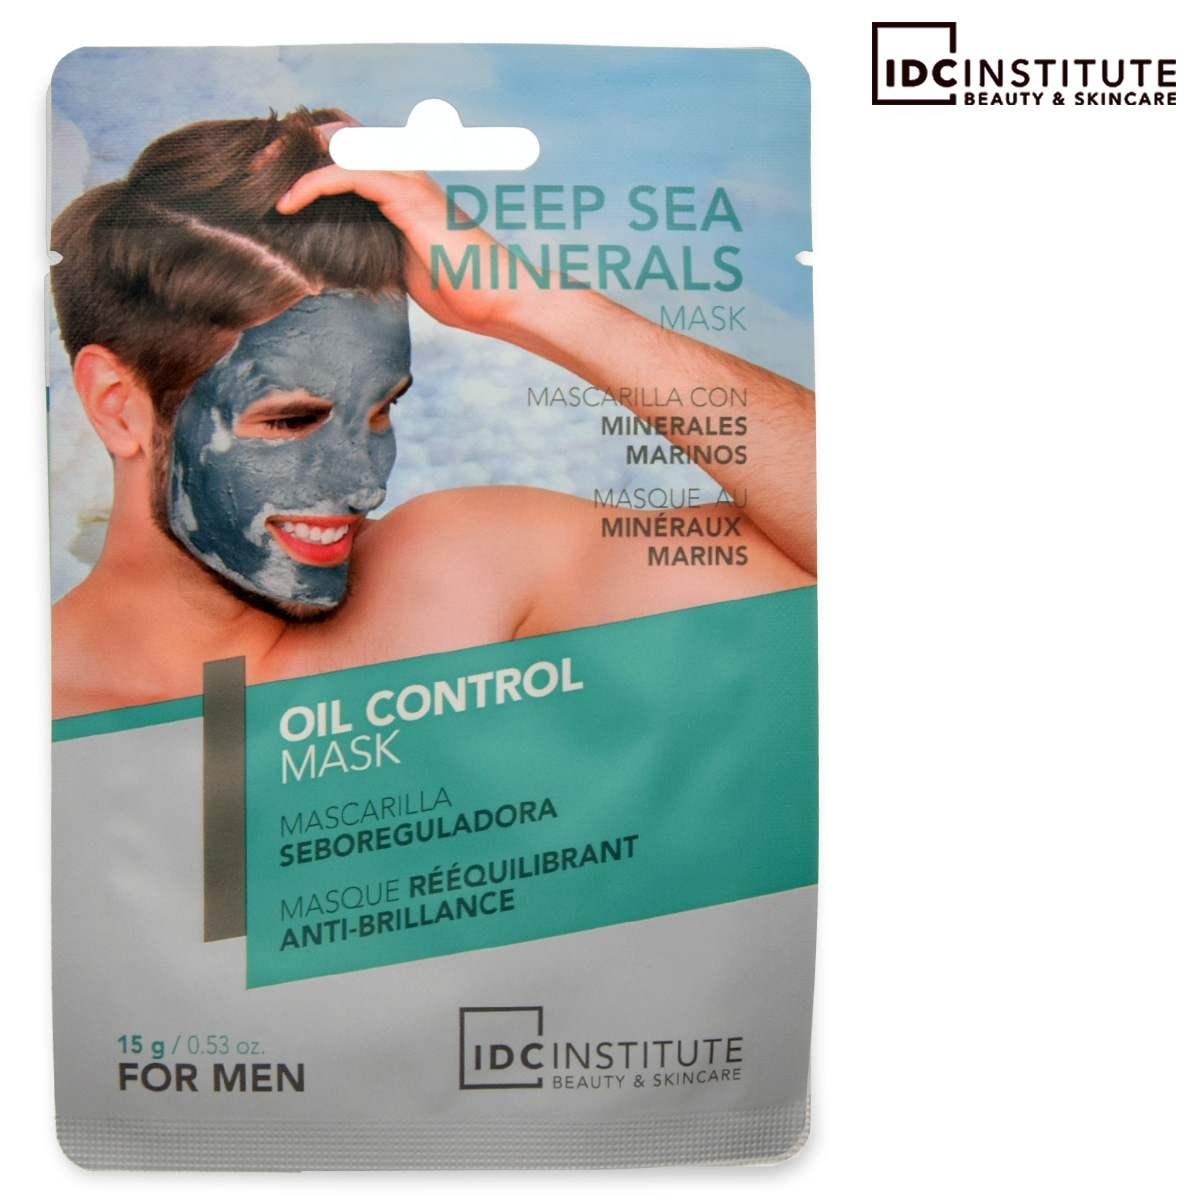 Idc institute oil control mask for men